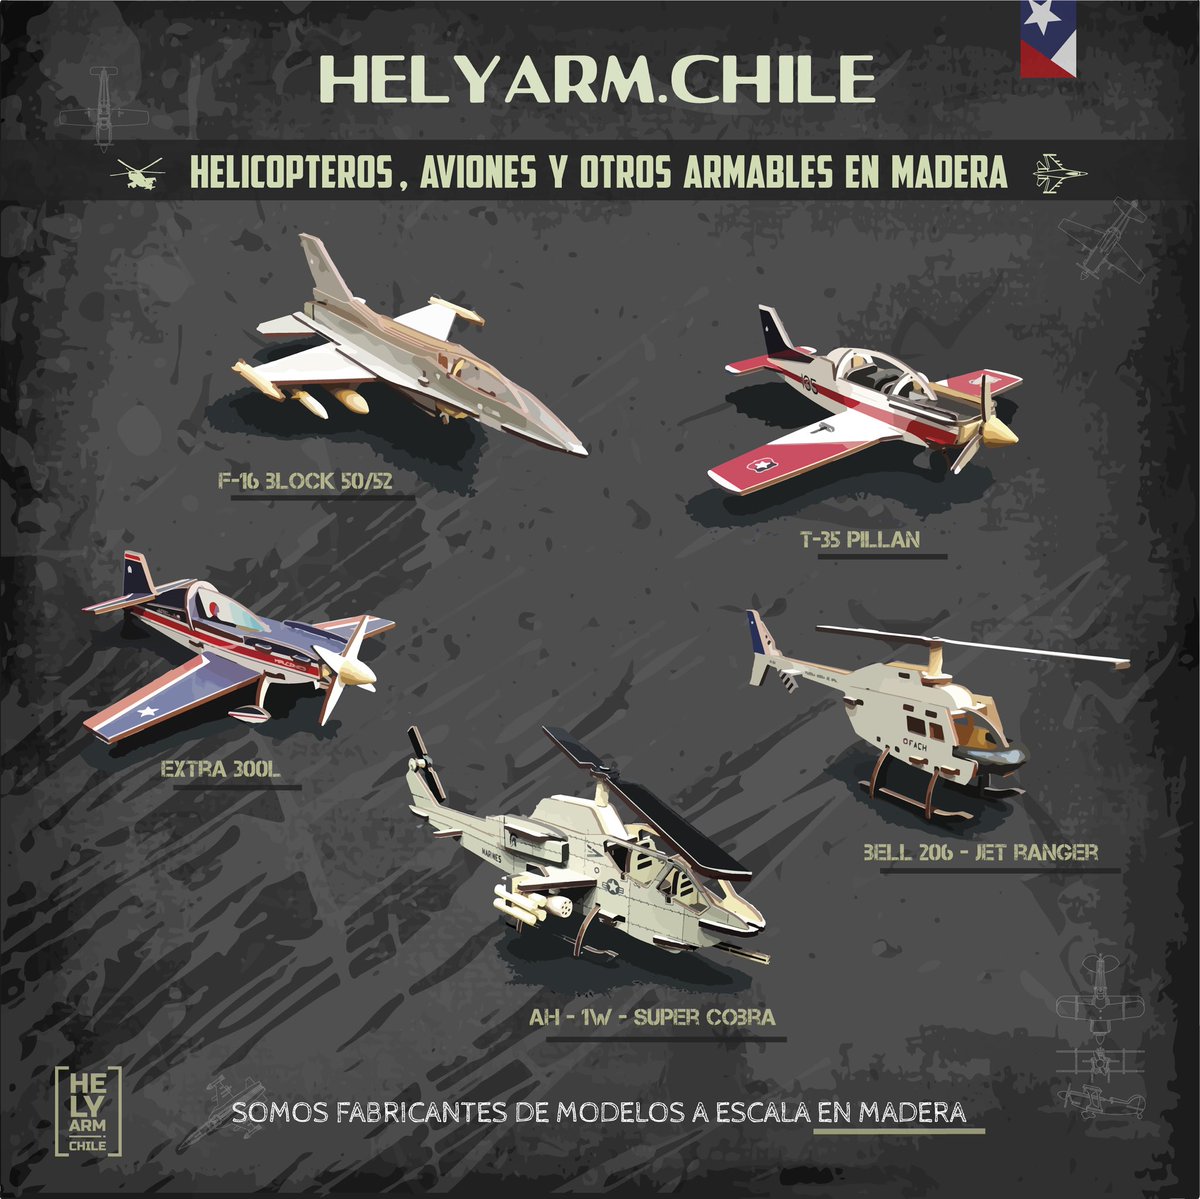 Helyarm.Chile Twitter